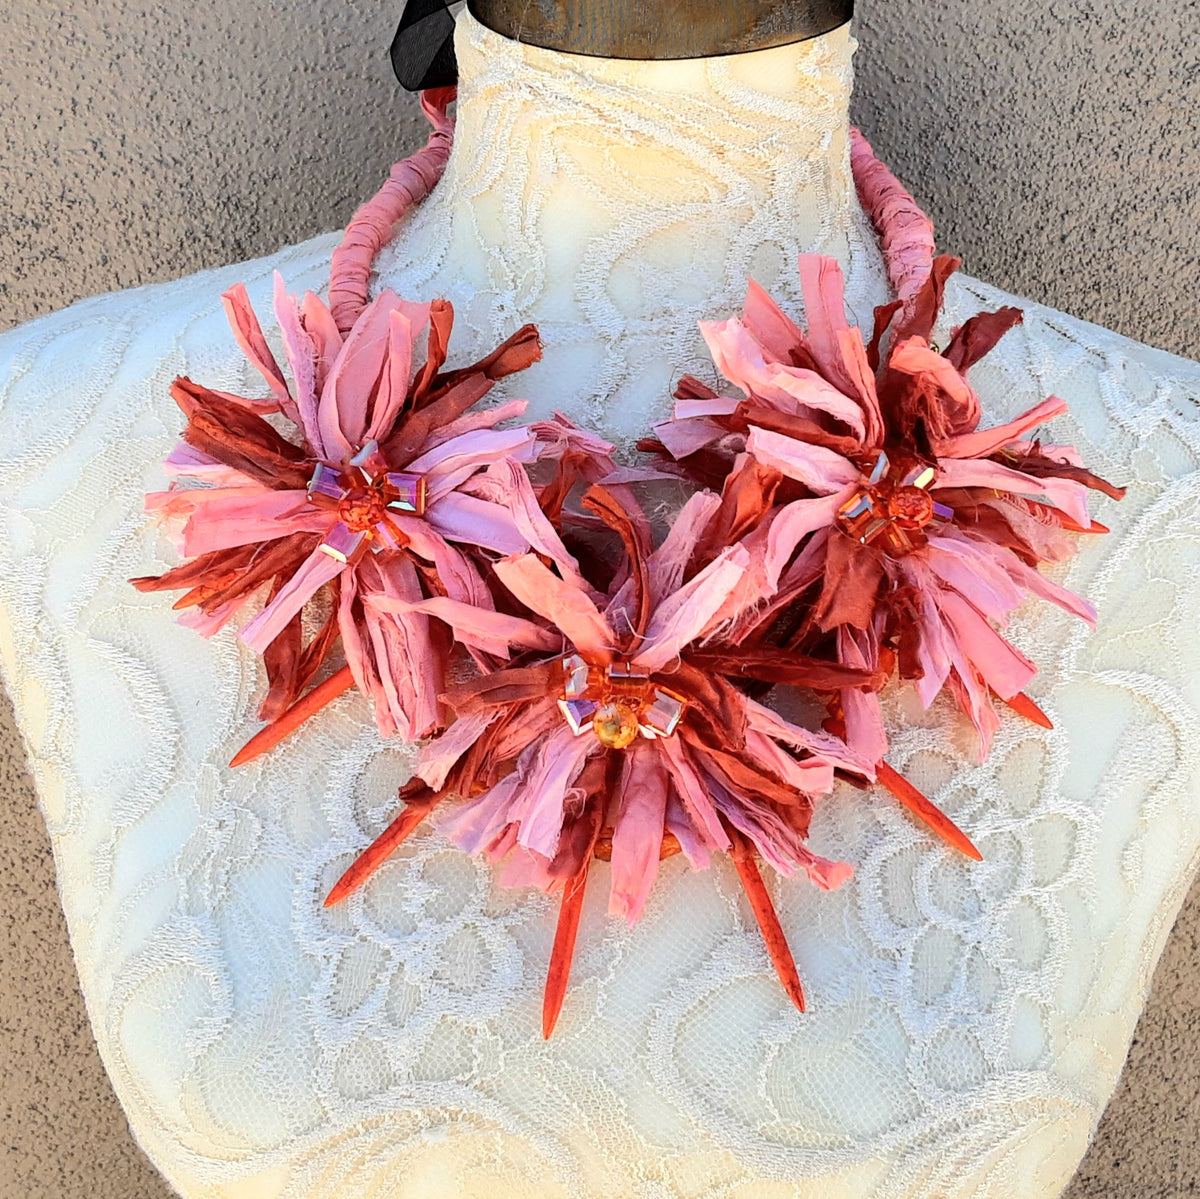 Sari Silk Ribbon / Raw Edge Ribbon / Recycled Sari Silks / Artisan Ribbon  /weaving / Art Yarn Supplies / Gift Wrapping/ Bouquet Ribbon 